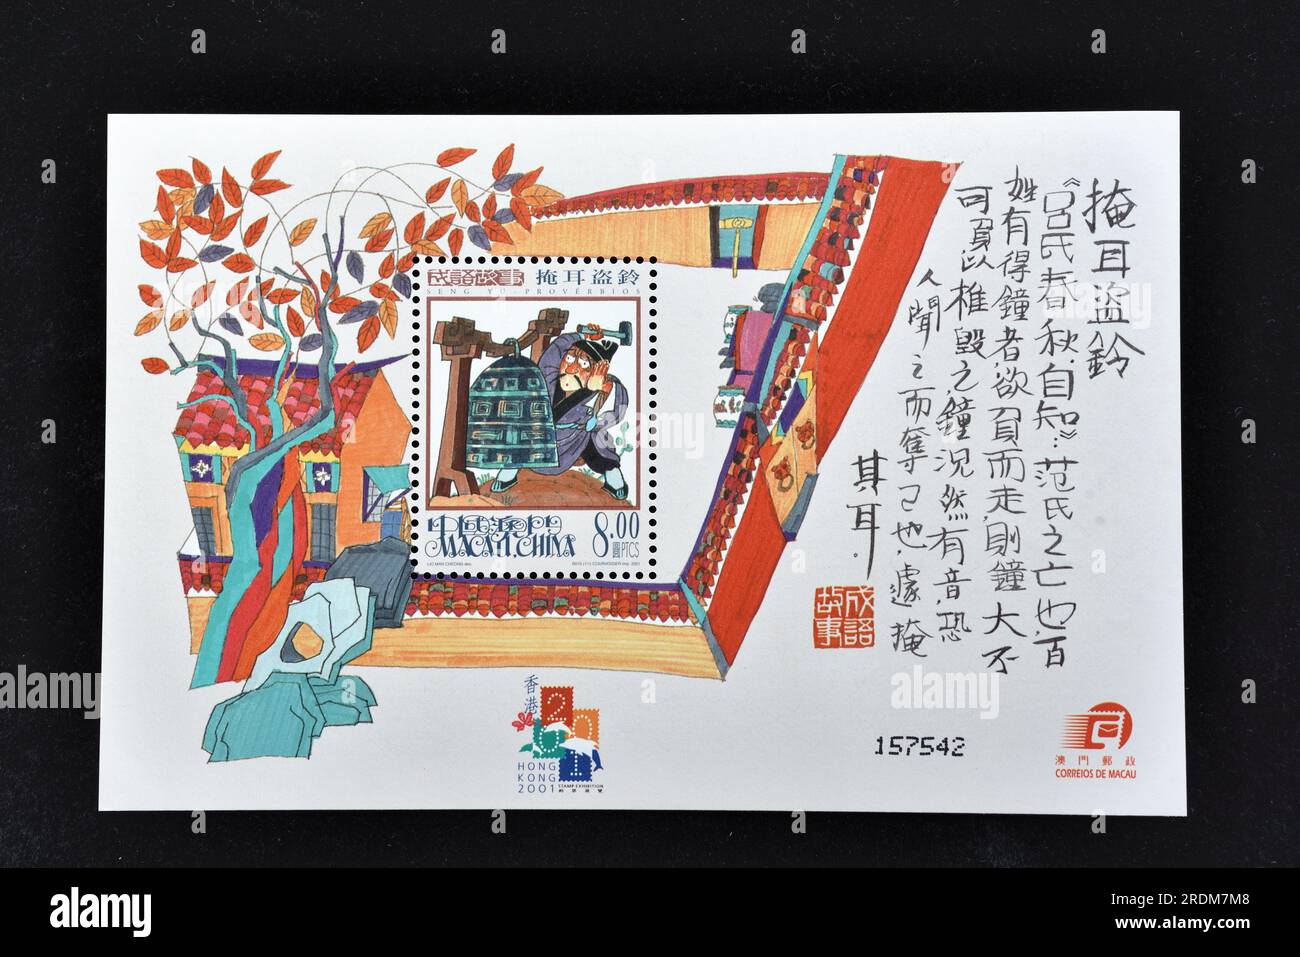 MACAU - CIRCA 2001: A stamps printed in Macao shows Seng Yu Idioms - Mencius' Mother Moves Three Times,circa 2001 Stock Photo